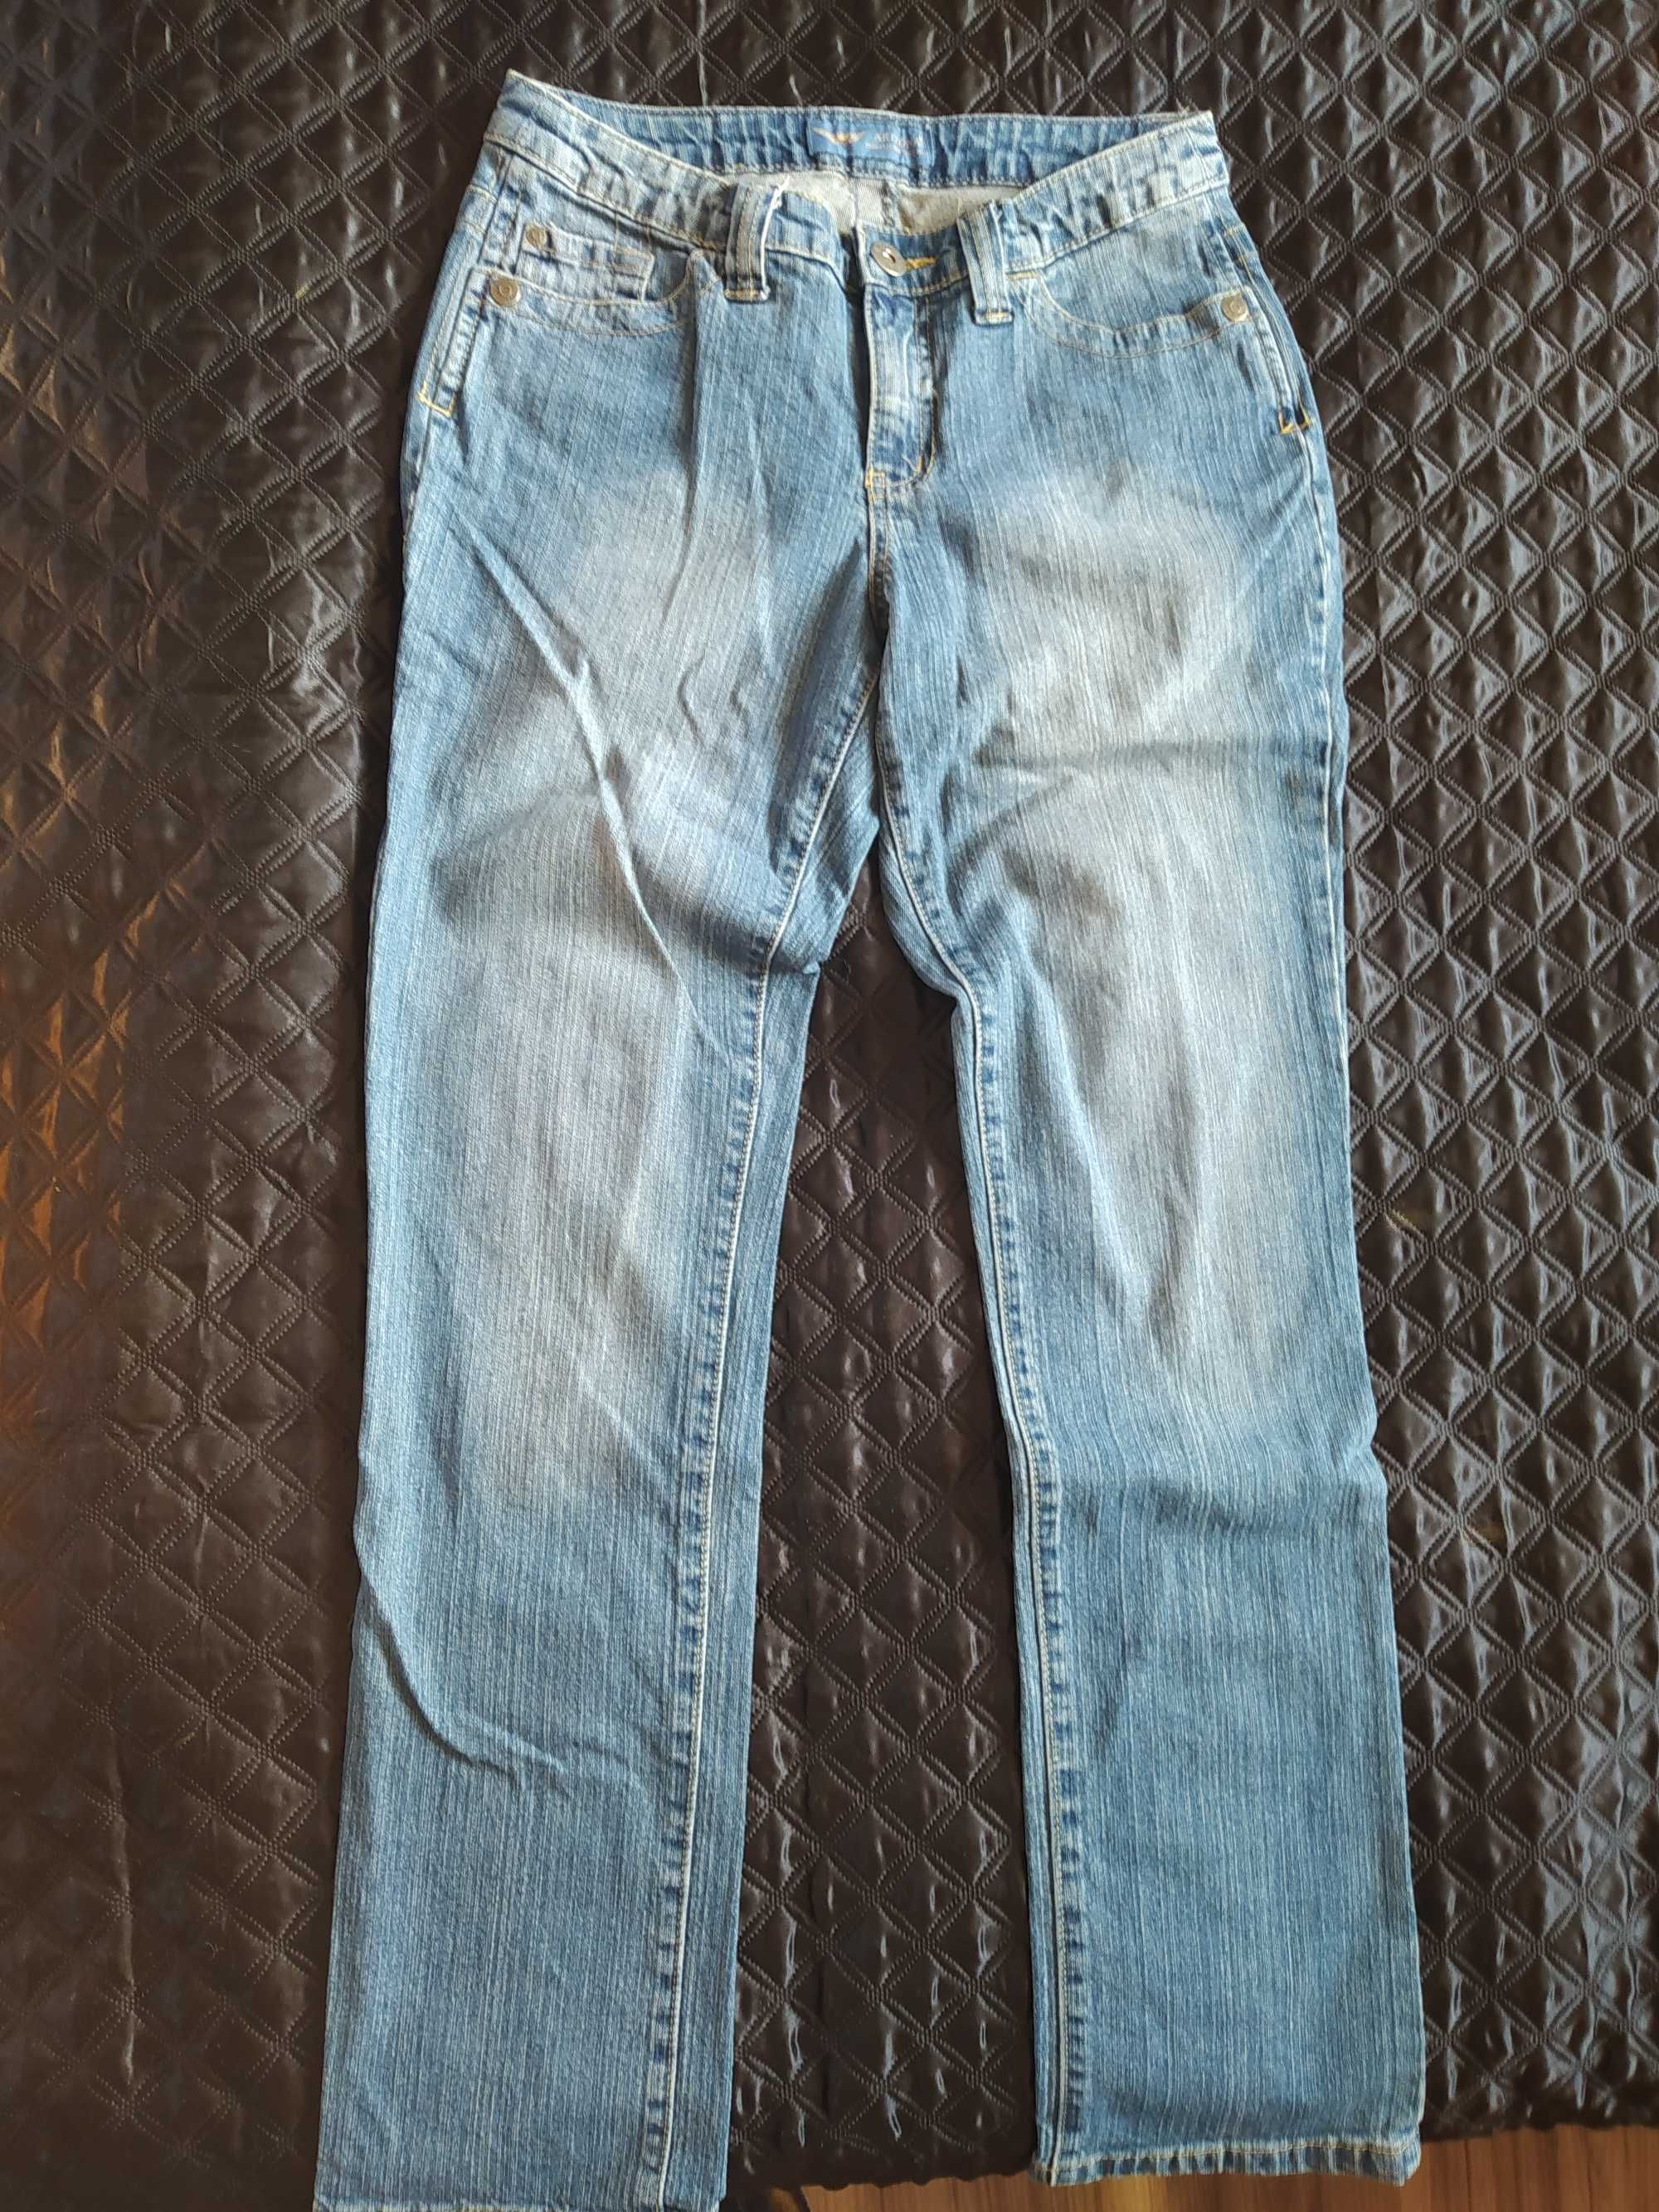 Jeansy po 10zł sztuka super spodnie rozmiar 38